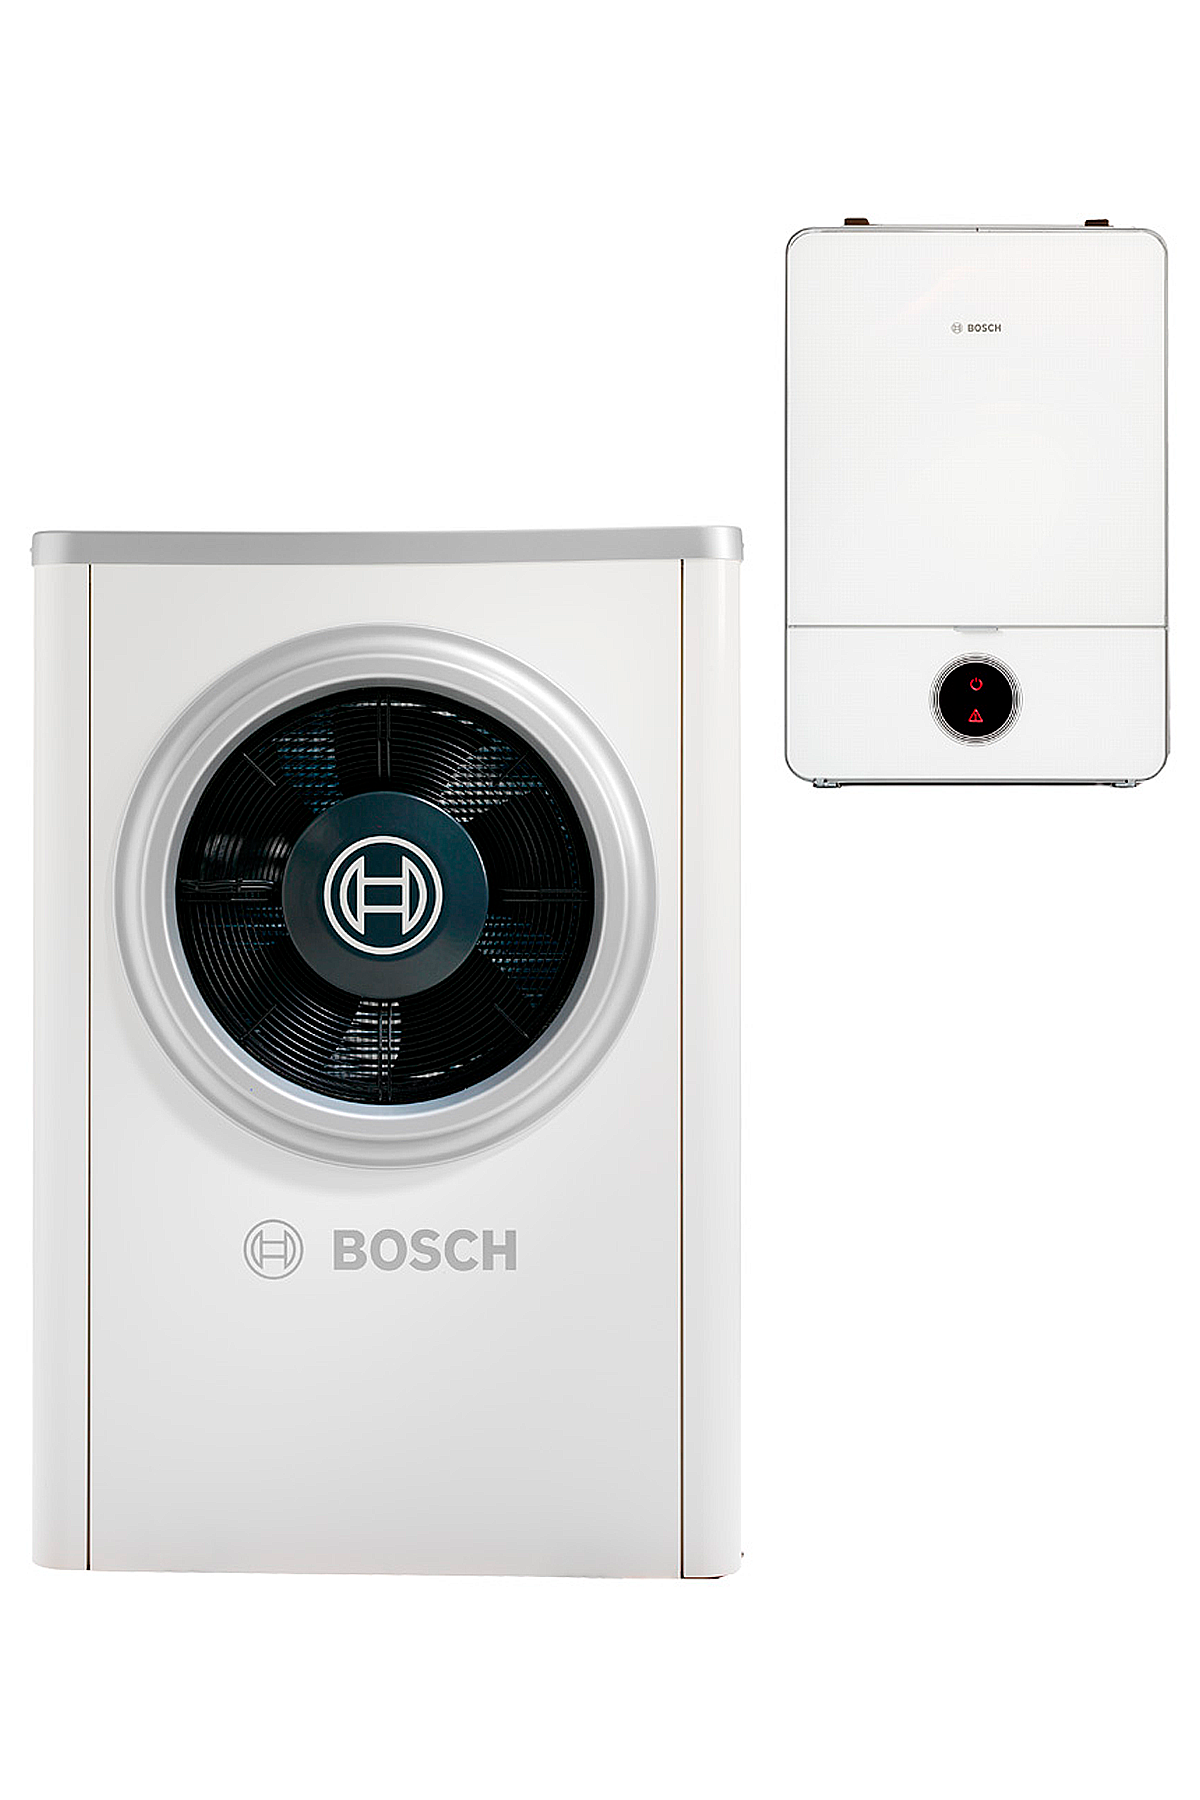 Тепловой насос Bosch Compress 7000i AW 7 E